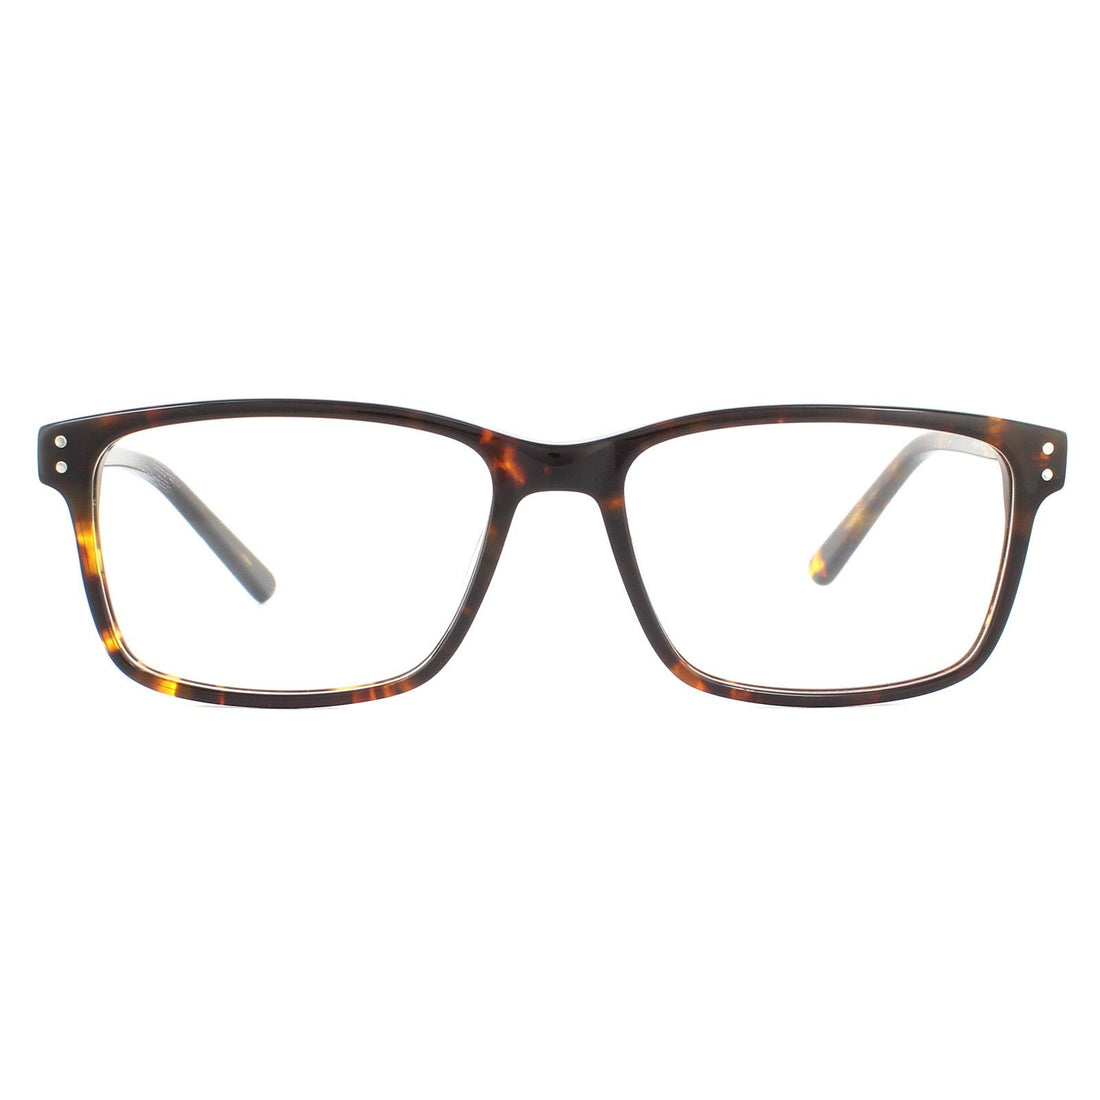 SunOptic A85 Glasses Frames Turtle Brown